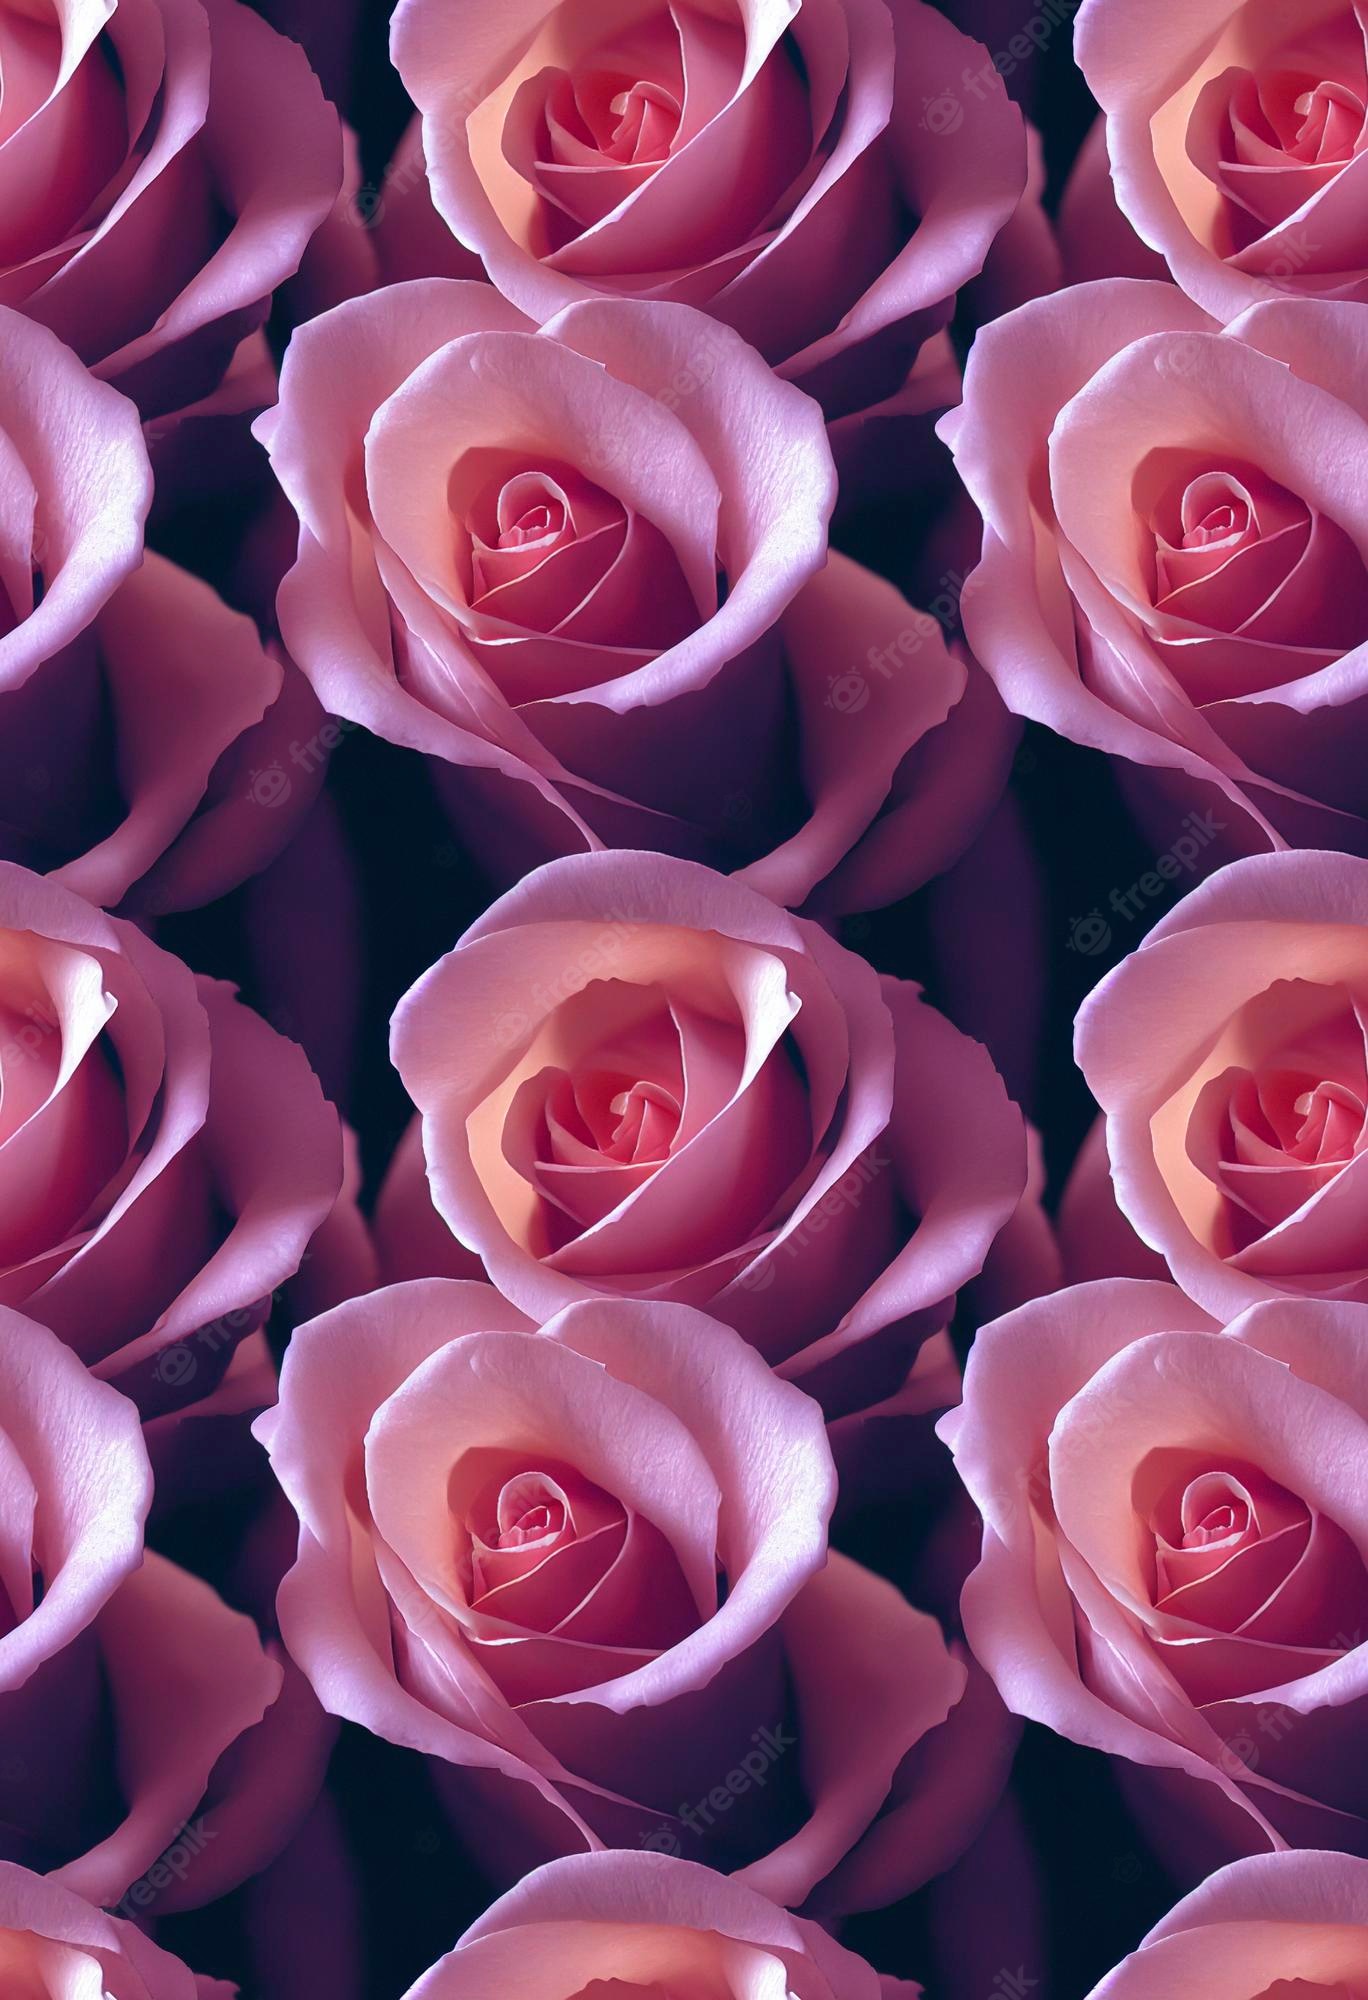 Premium Photo. Beautiful roses seamless background romantic flowers luxury repeating backdrop 3D illustration